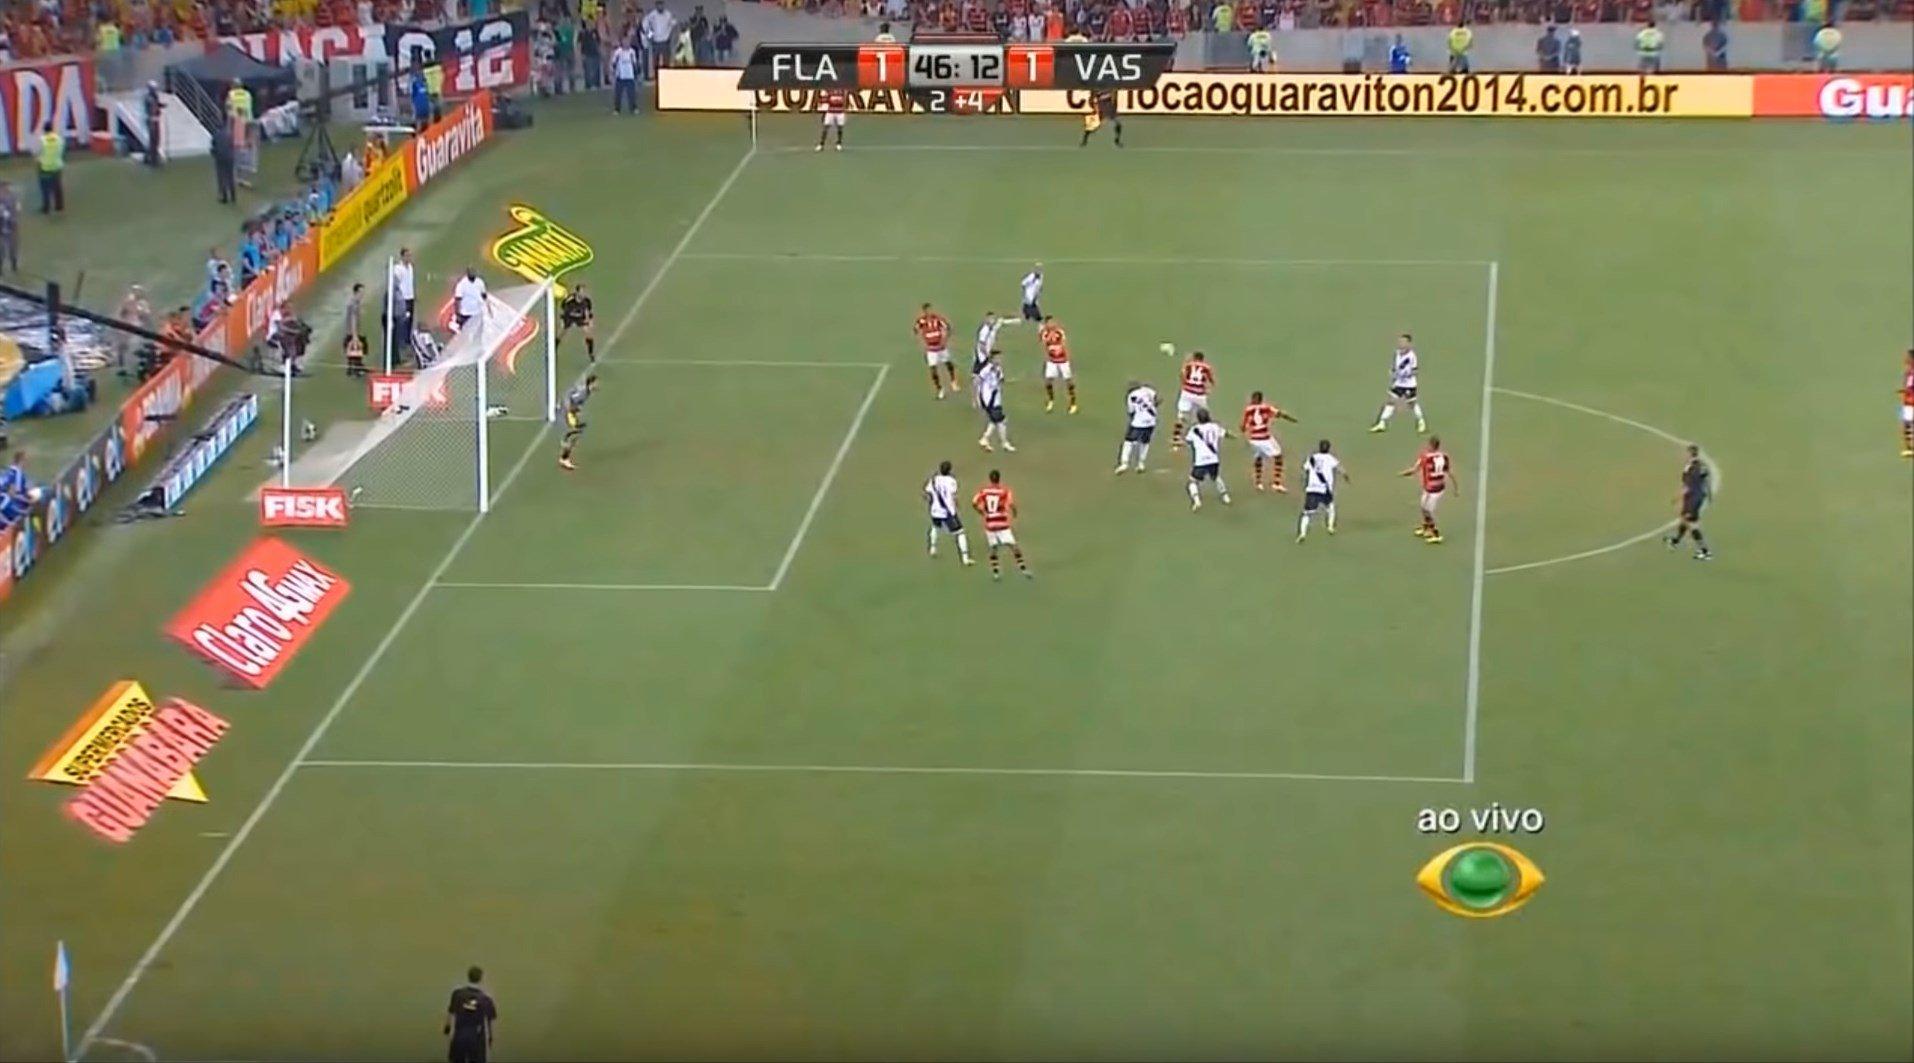 Vasco 1 x 1 Flamengo - Gol de Márcio Araújo no fim dá título ao Fla, mas Nixon, impedido, participa da jogada